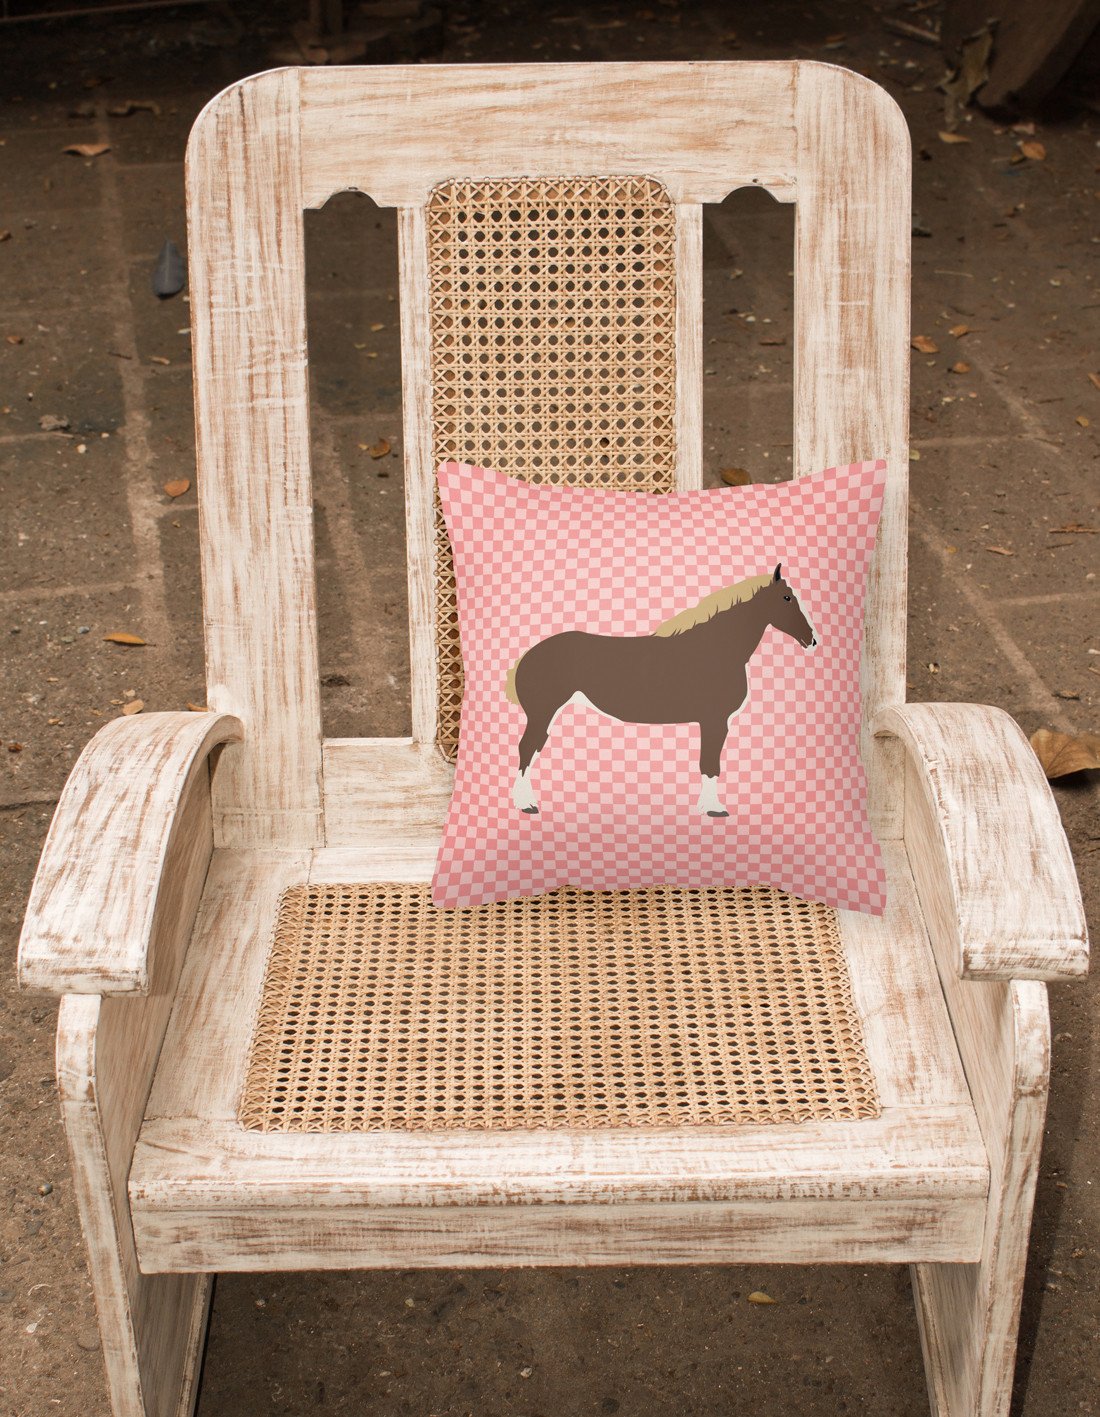 Percheron Horse Pink Check Fabric Decorative Pillow BB7906PW1818 by Caroline's Treasures